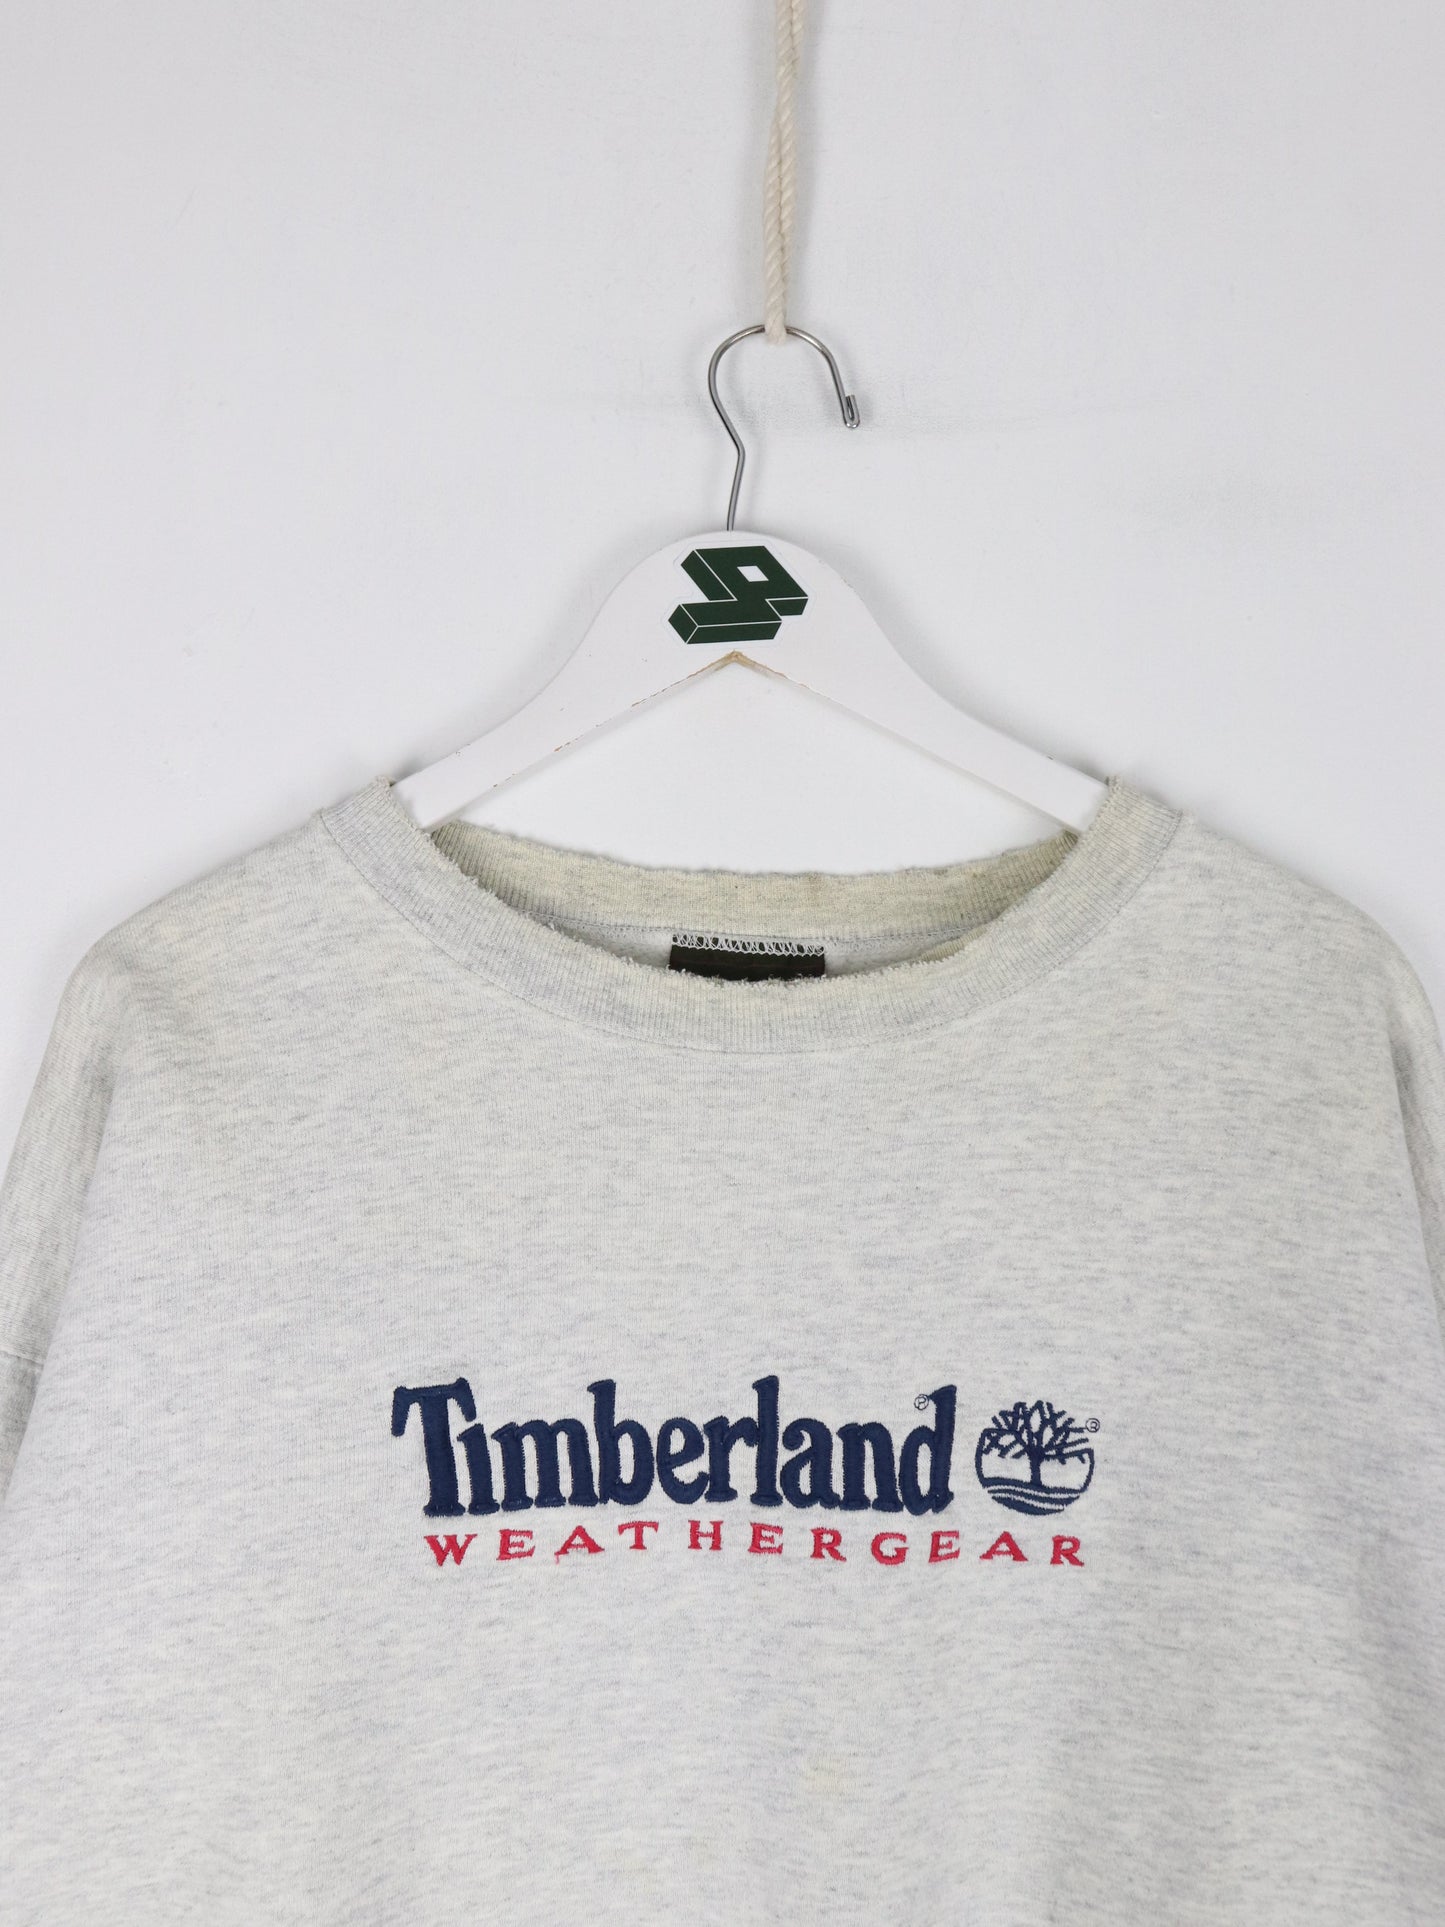 Vintage Timberland Weathergear Sweatshirt Mens Large Grey 90s